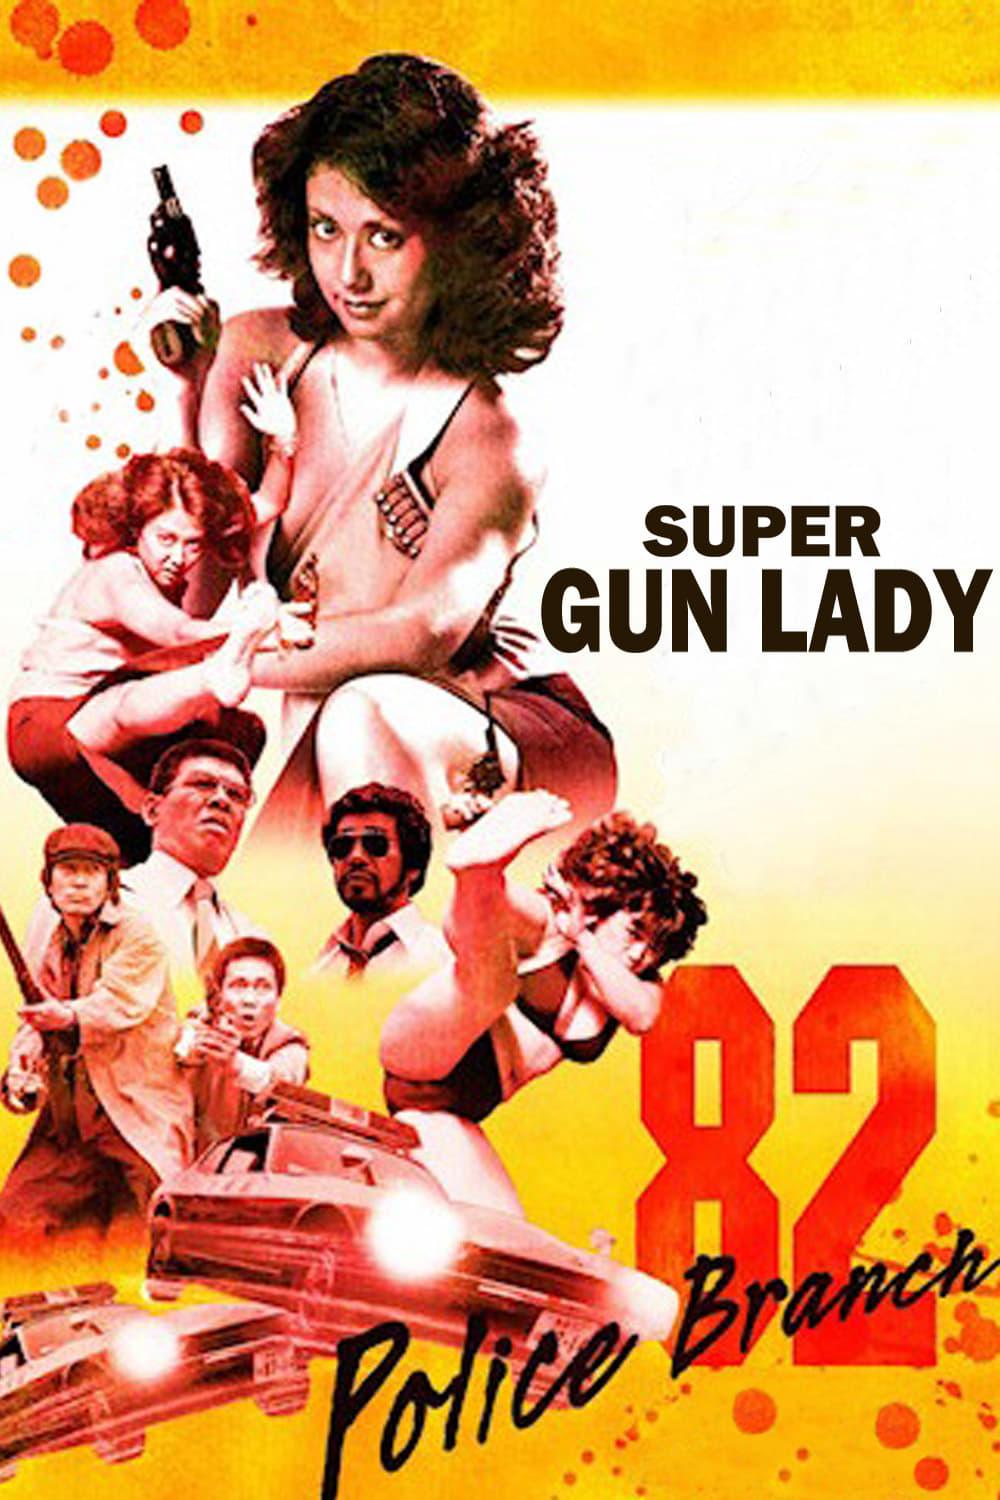 Super Gun Lady: Police Branch 82 poster